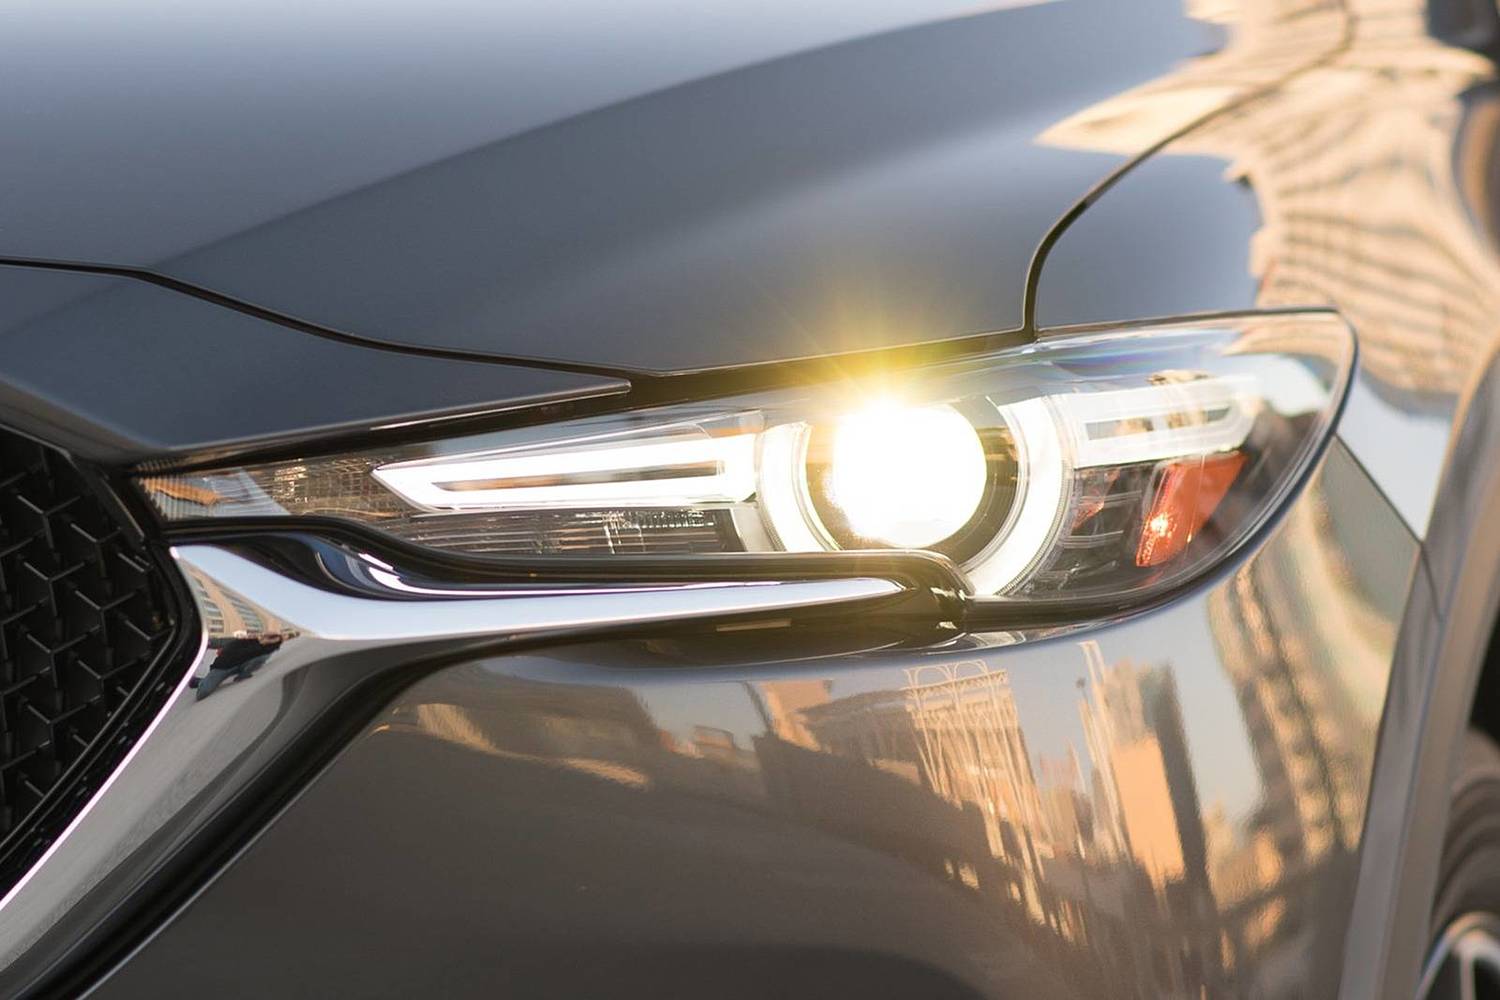 Mazda CX-5 Grand Touring 4dr SUV Headlamp Detail (2017 model year shown)